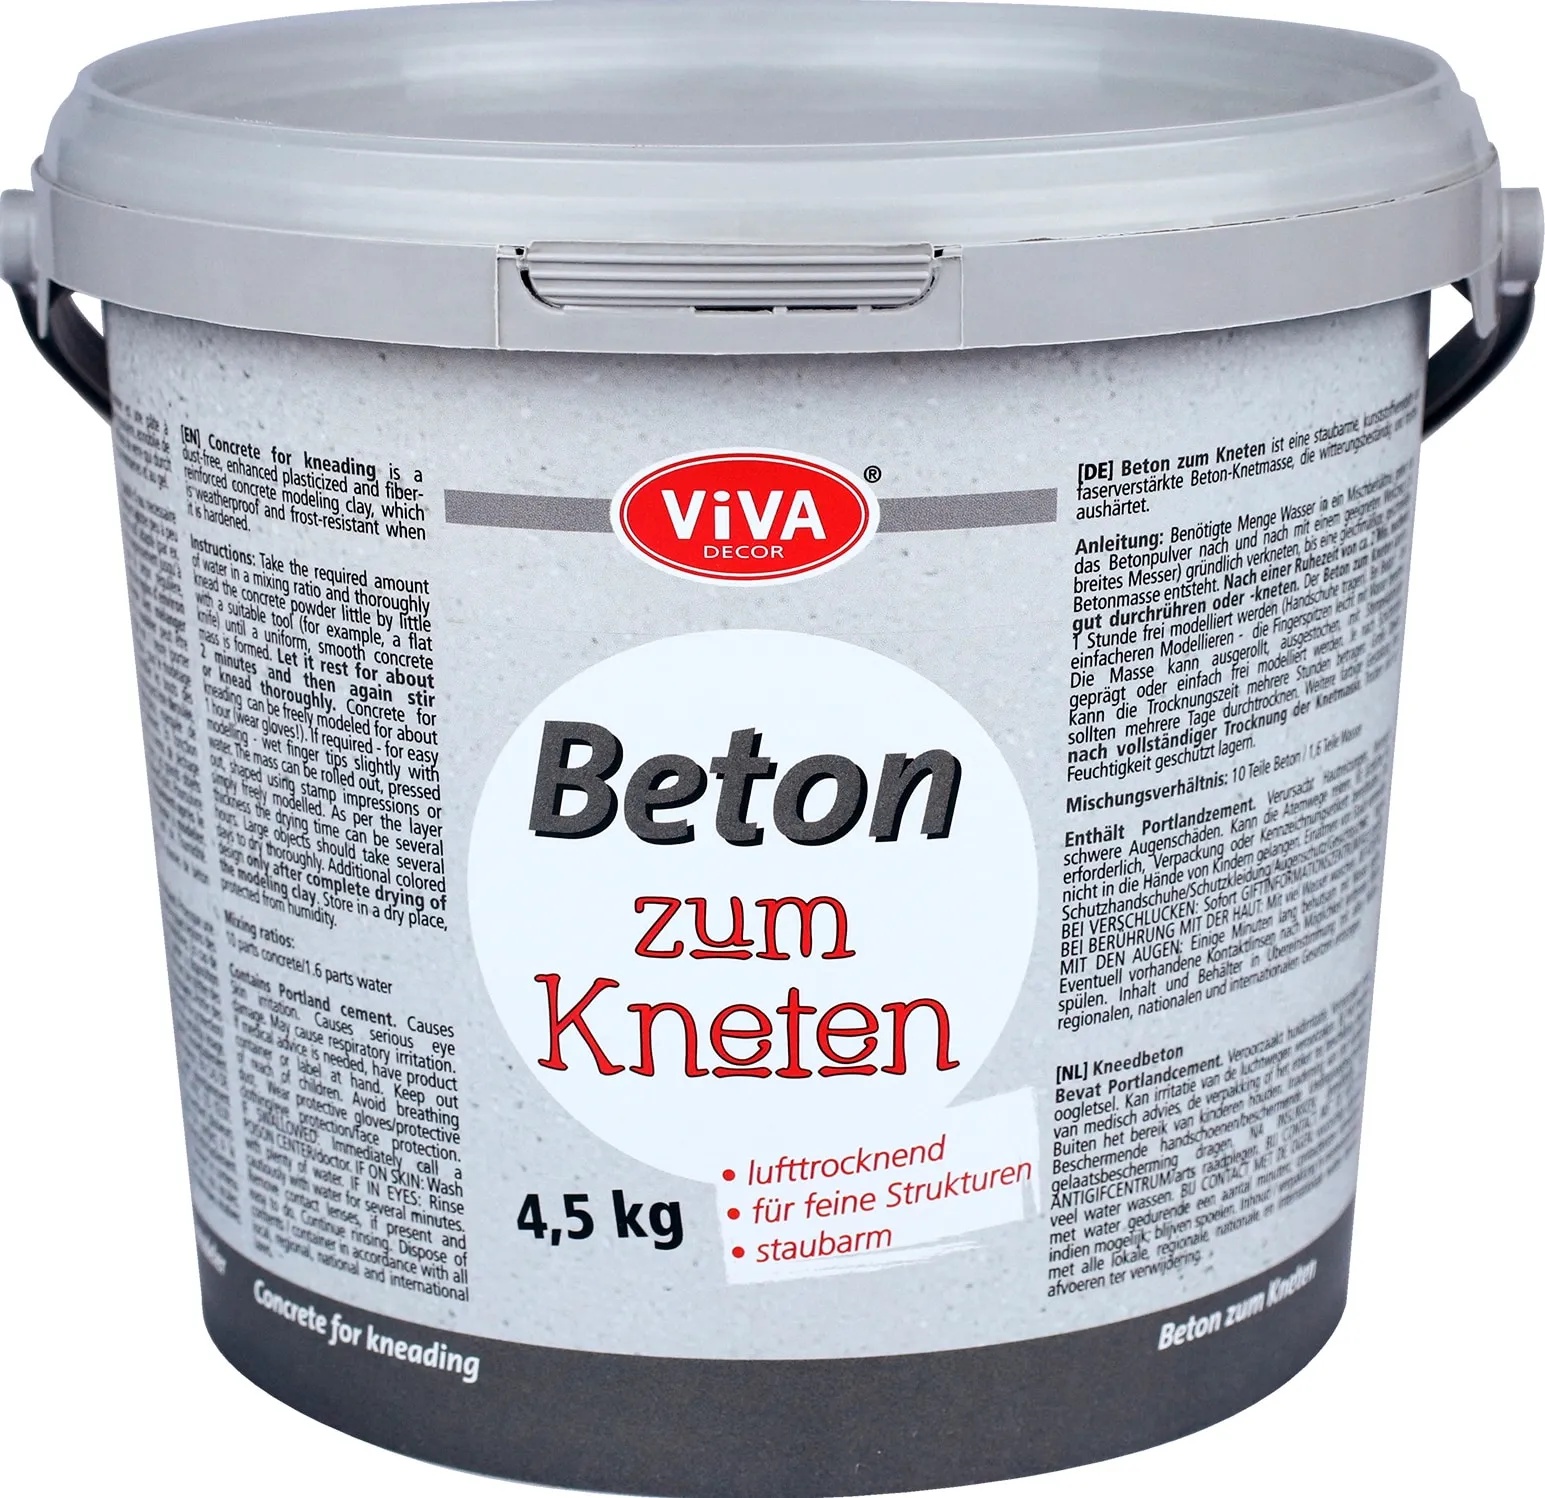 Viva Decor Beton zum Kneten, 1,5 kg Eimer